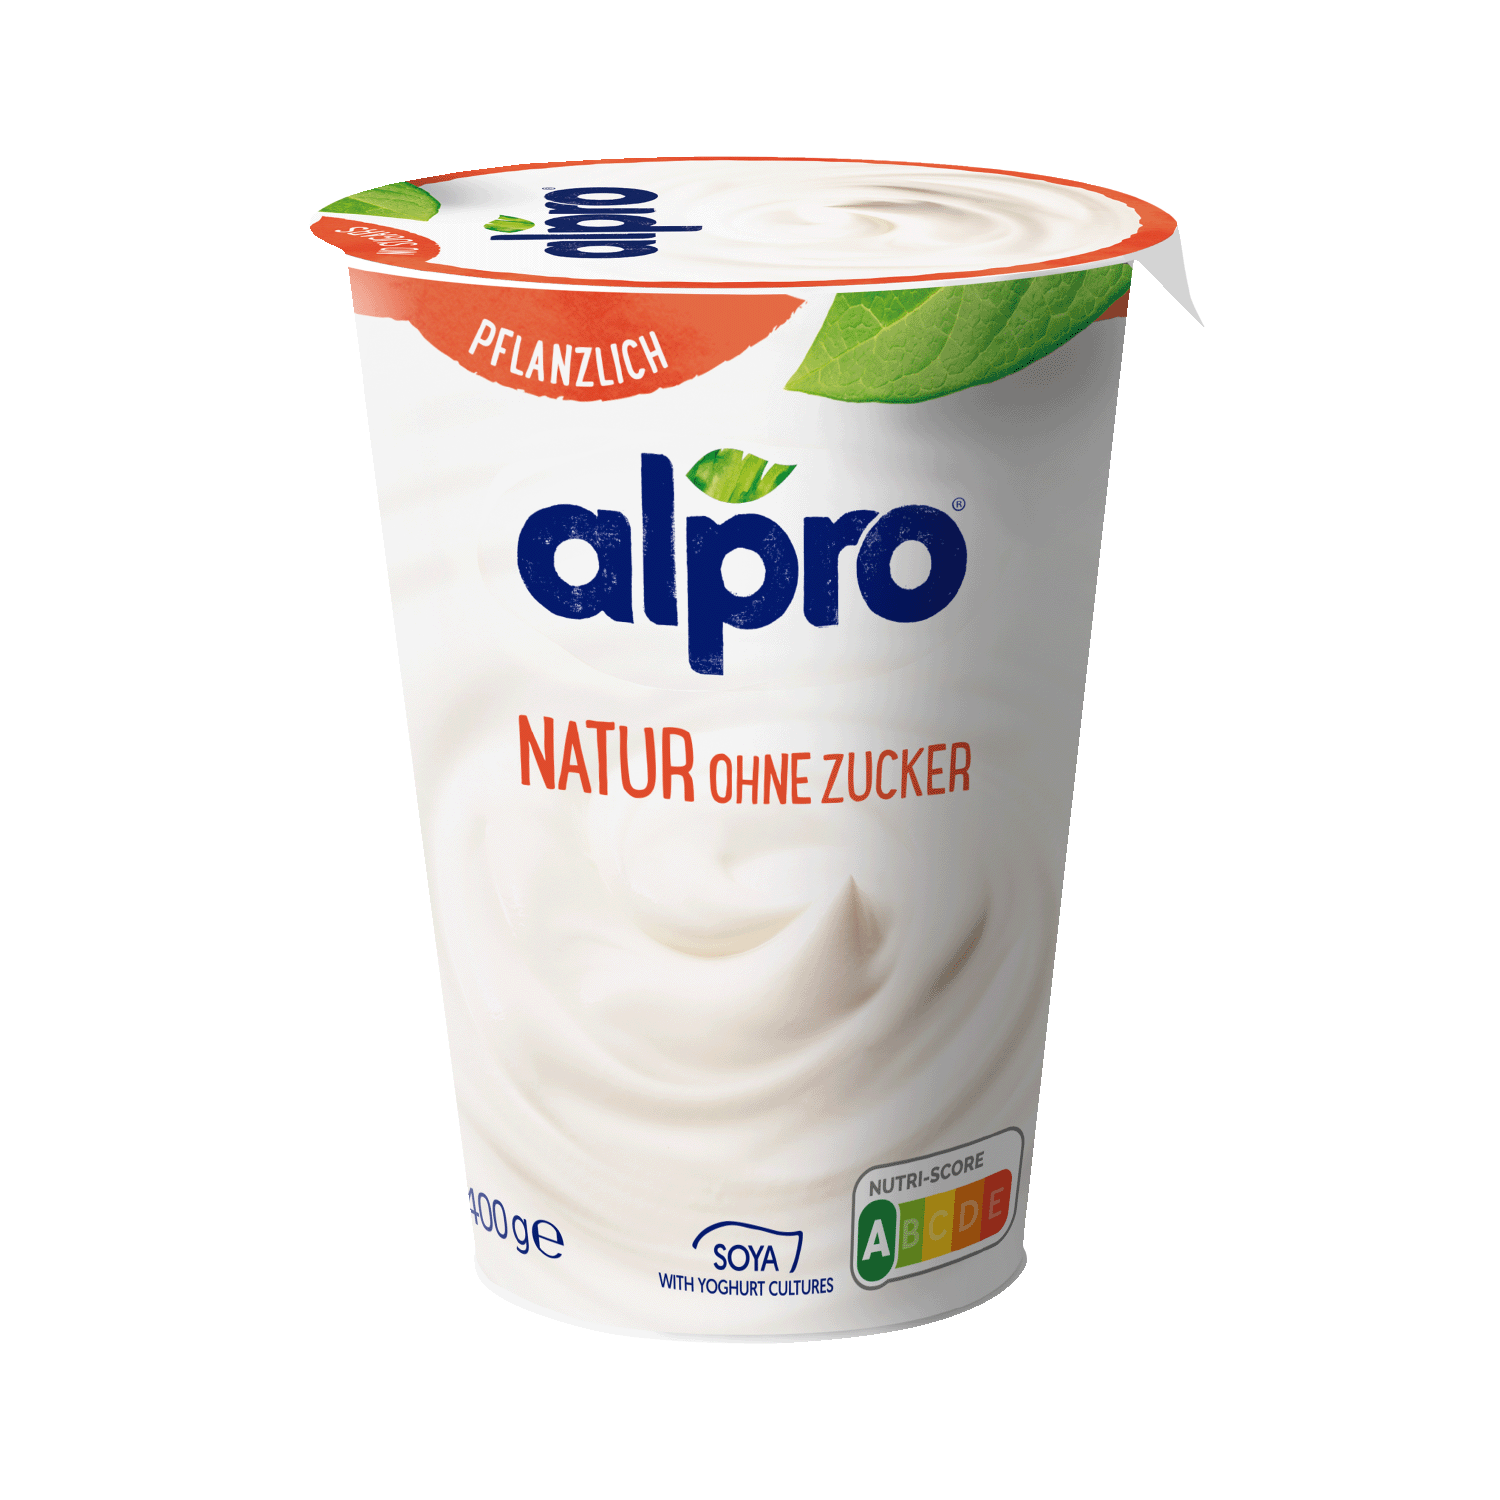 soy-based yogurt alternative natural without sugar, 400g